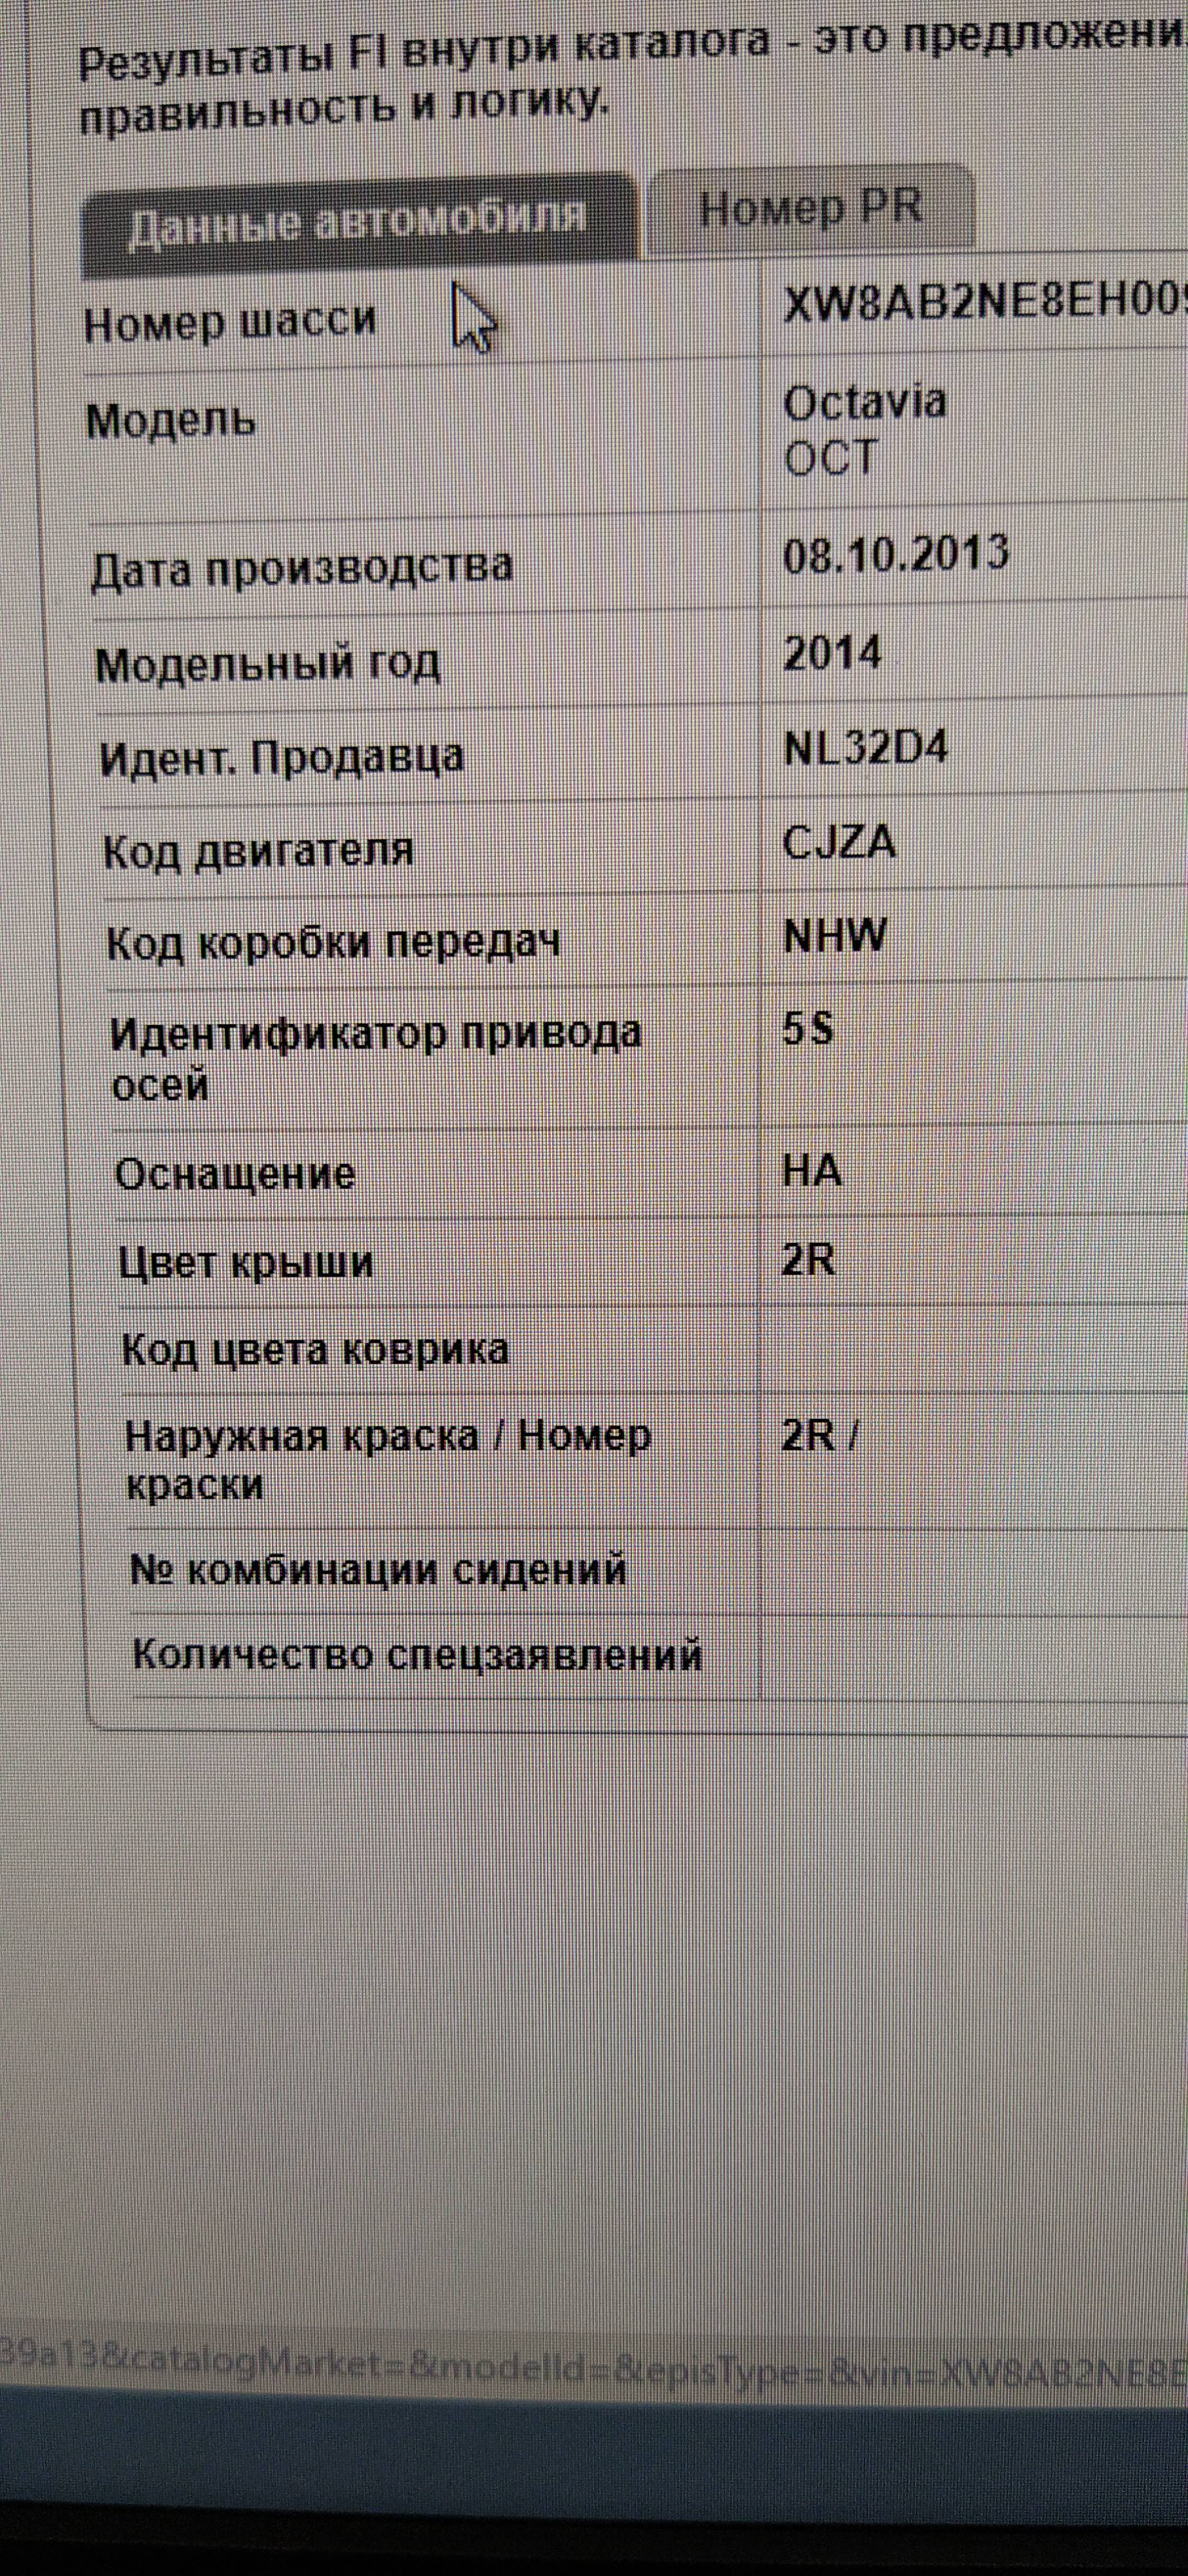 0AH_NBW Novozhilov 7072020 (5)